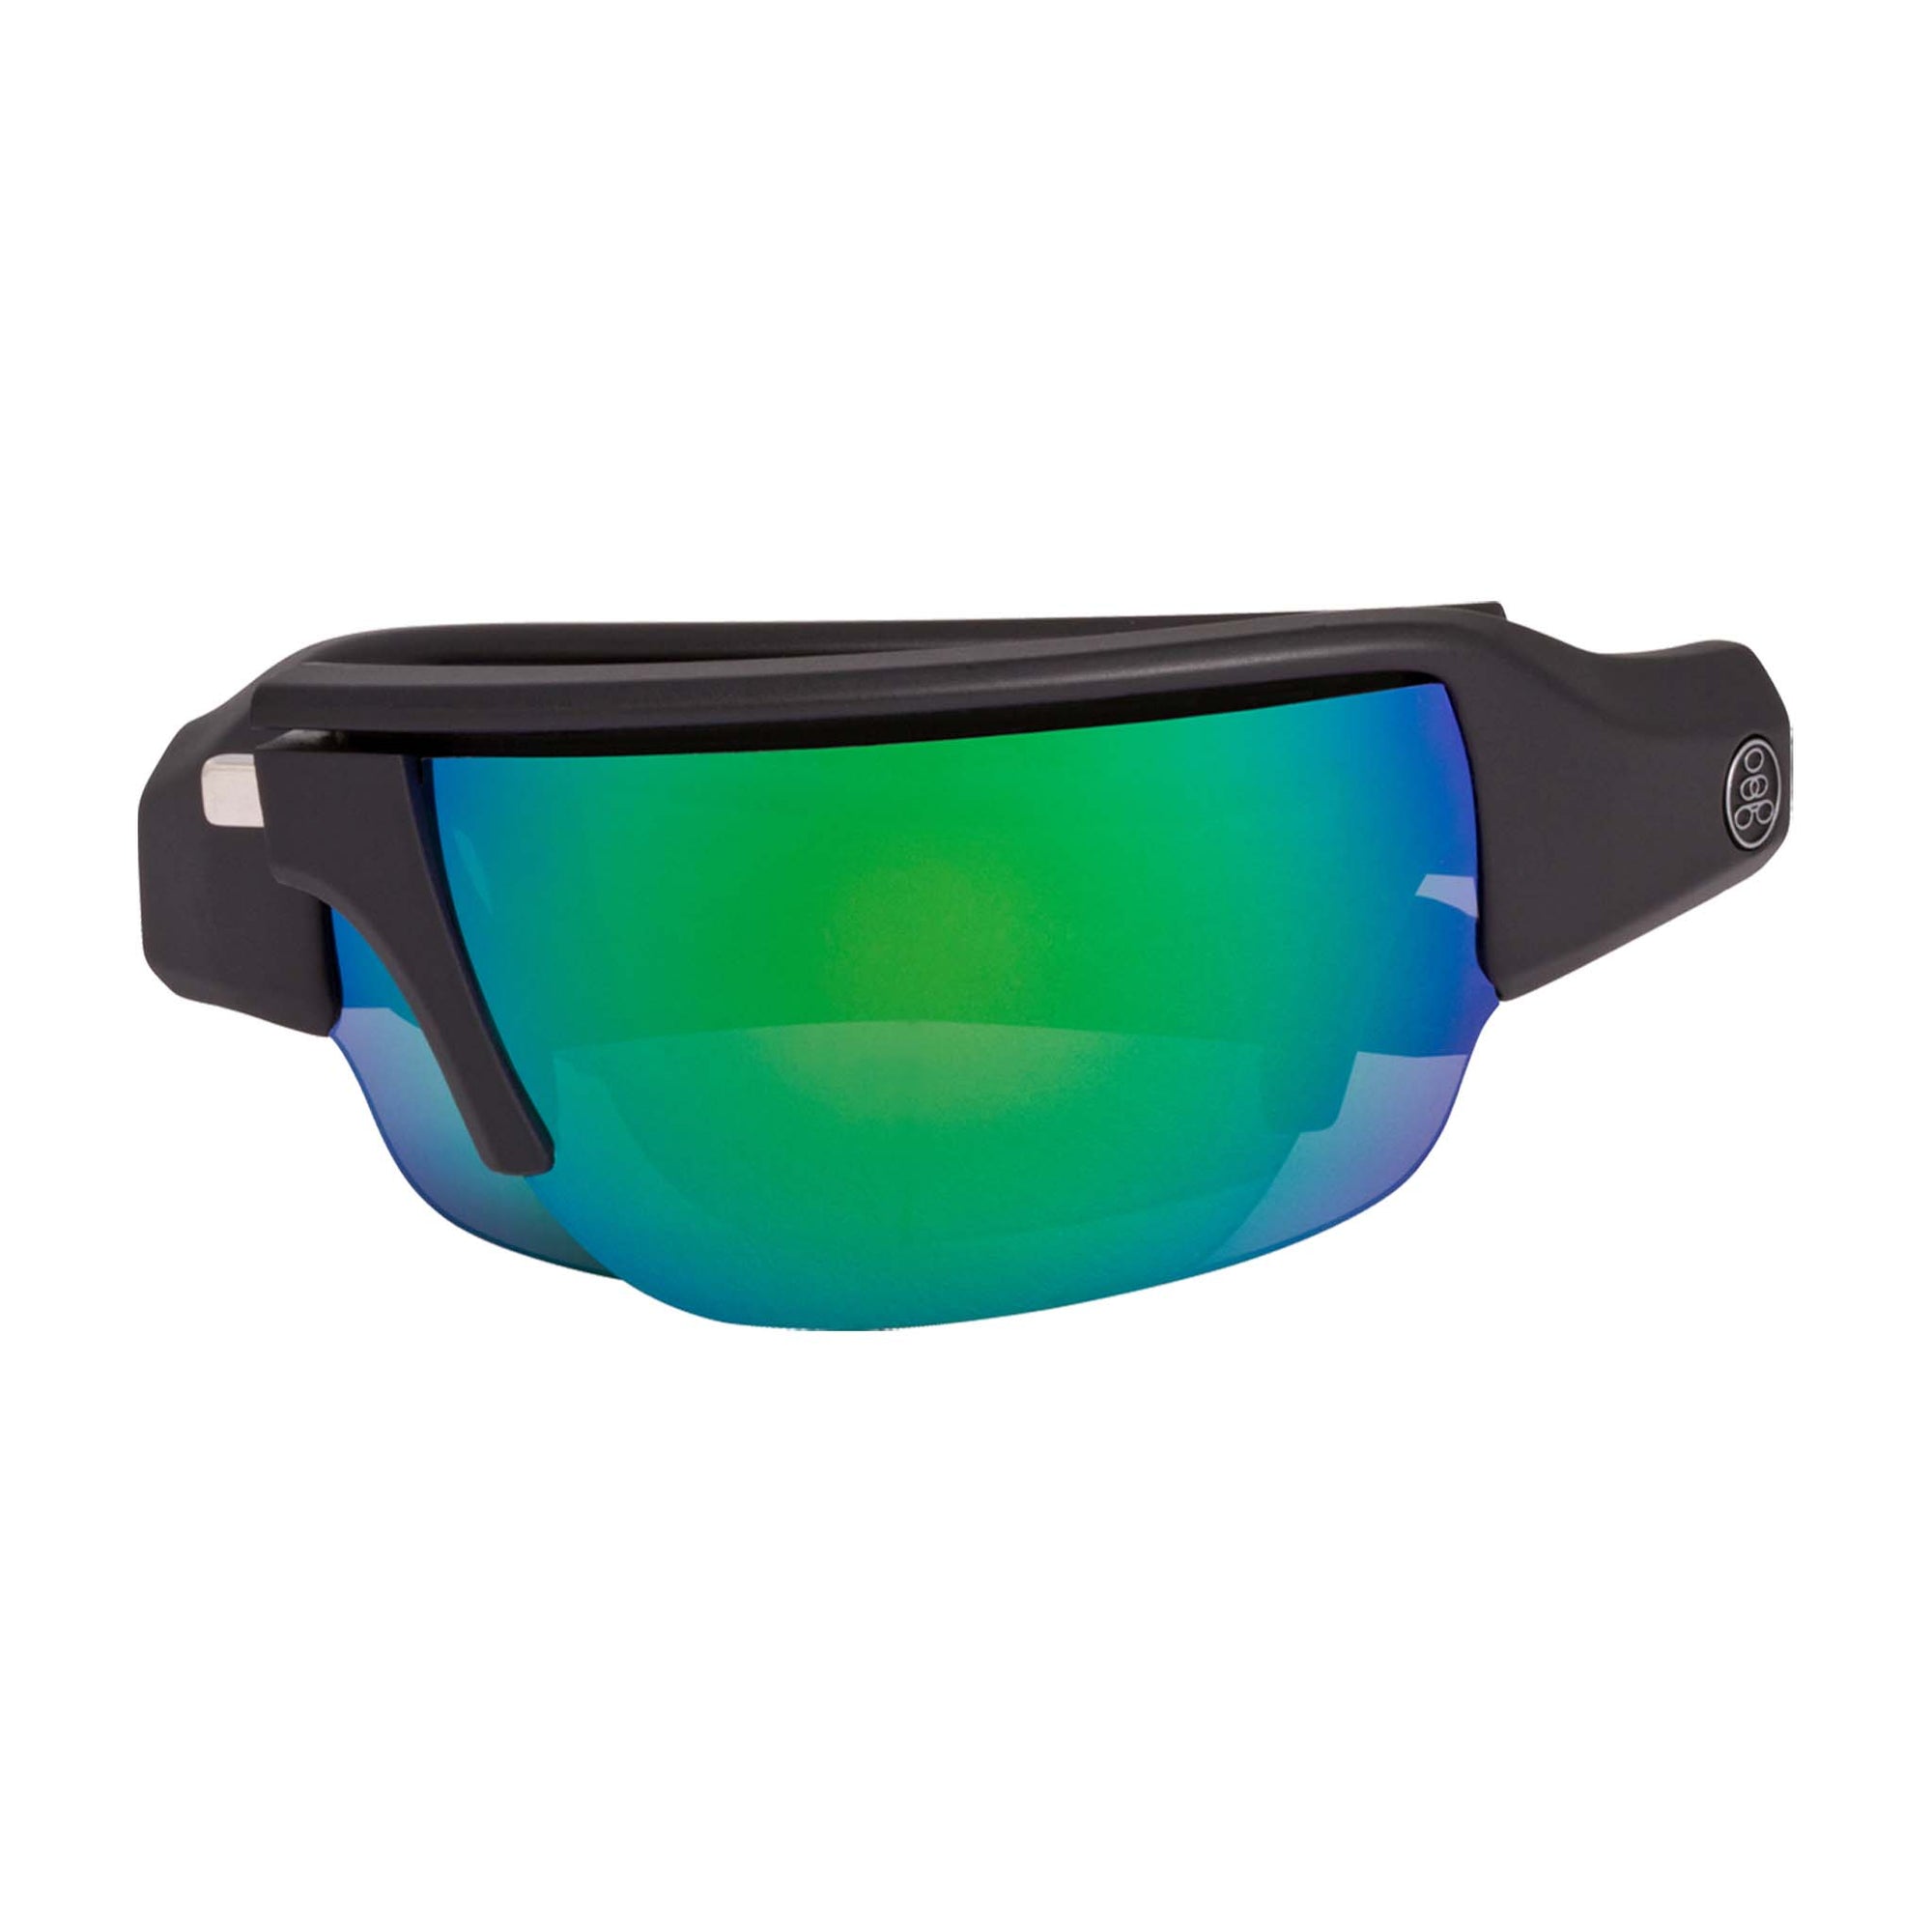 Popticals, Premium Compact Sunglasses, PopGun, 010010-BMEN, Polarized Sunglasses, Matte Black Frame, Gray Lenses w/Green Mirror, Compact View